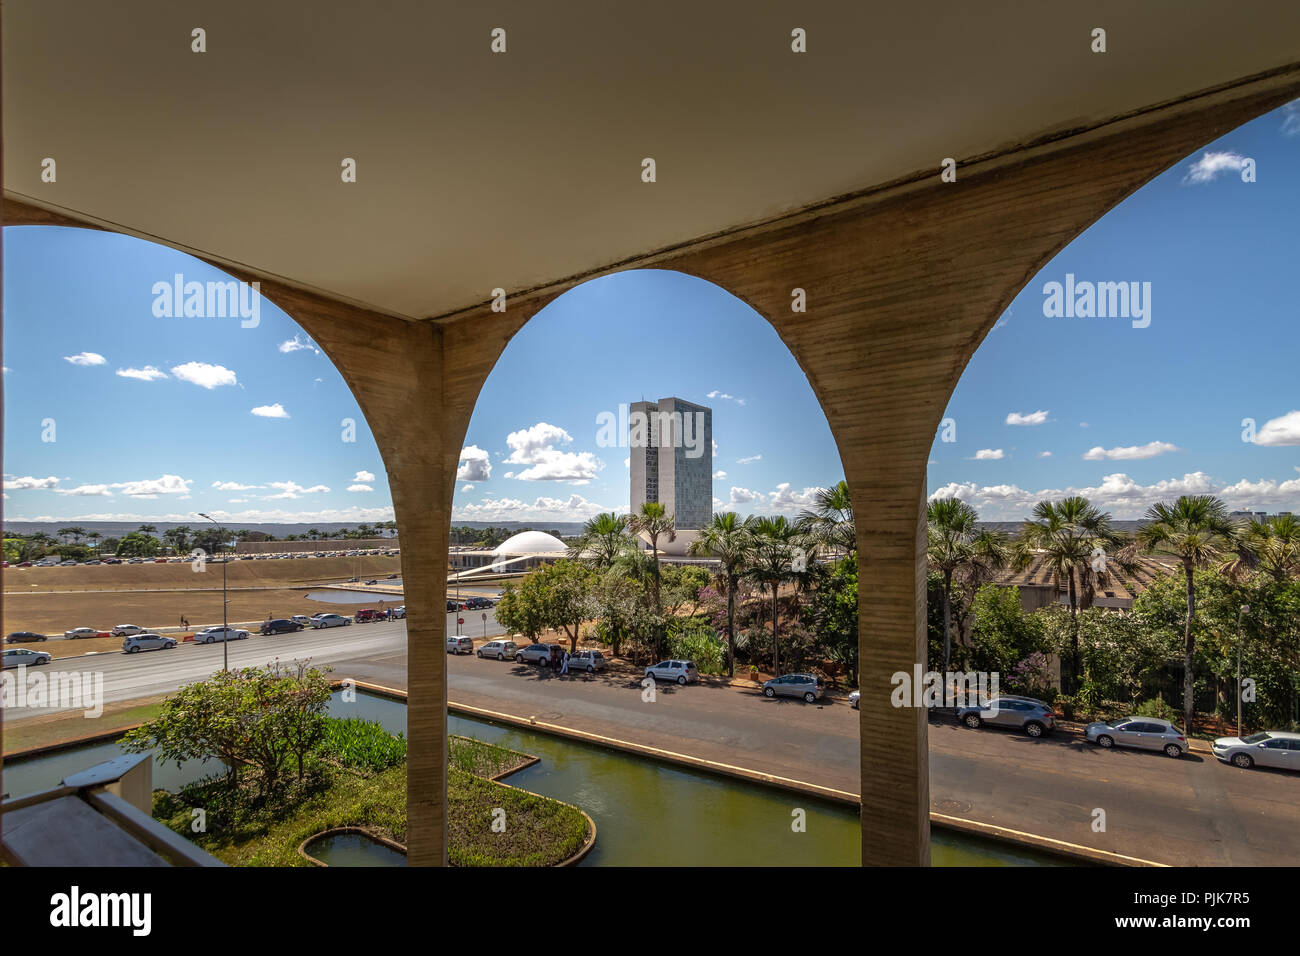 National Congress view from Itamaraty Palace Terrace Gardens - Brasilia, Distrito Federal, Brazil Stock Photo